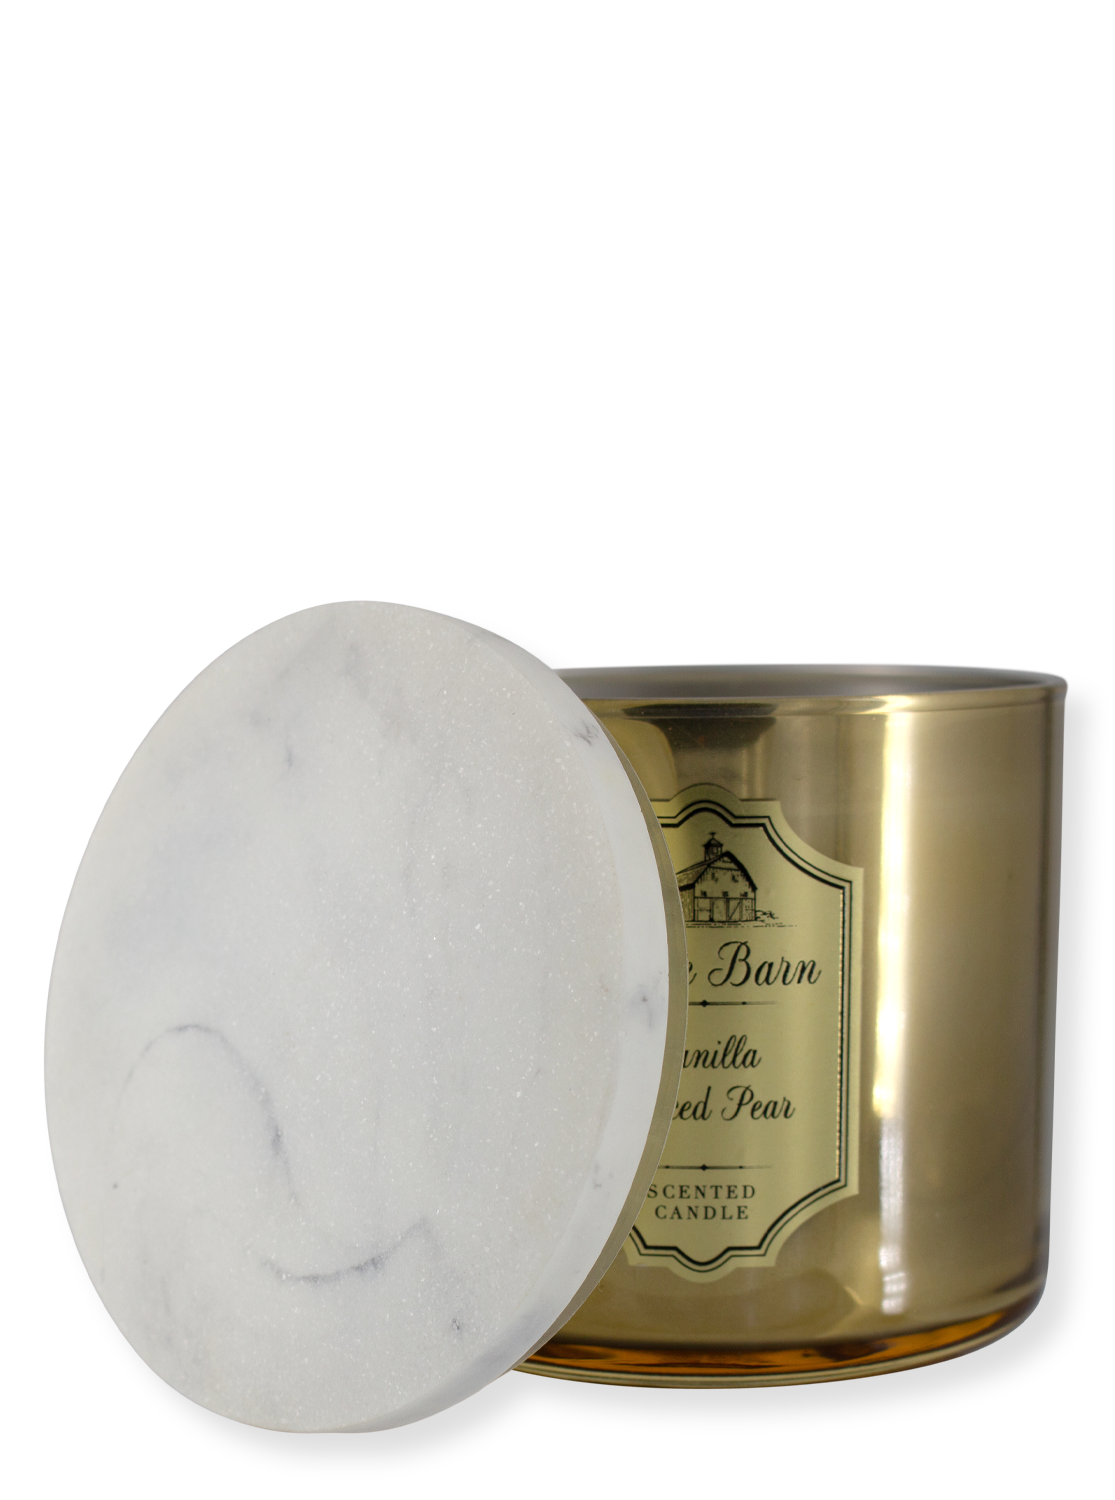 Rarity - 3 -butt candle - Vanilla Spiced Pear - 411g